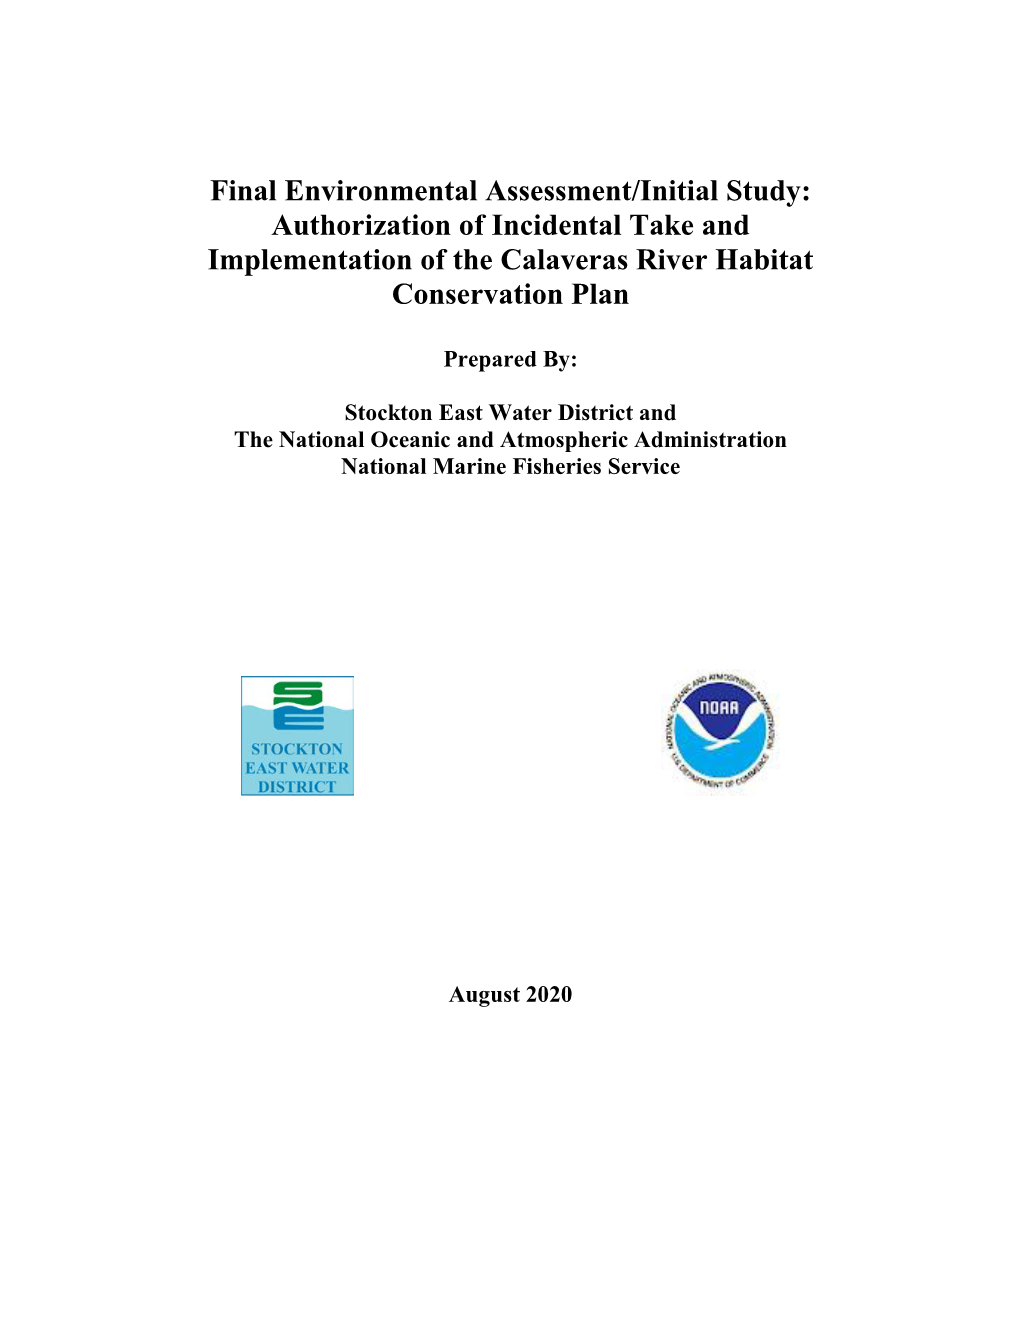 Calaveras River HCP Environmental Assessment Initial Study